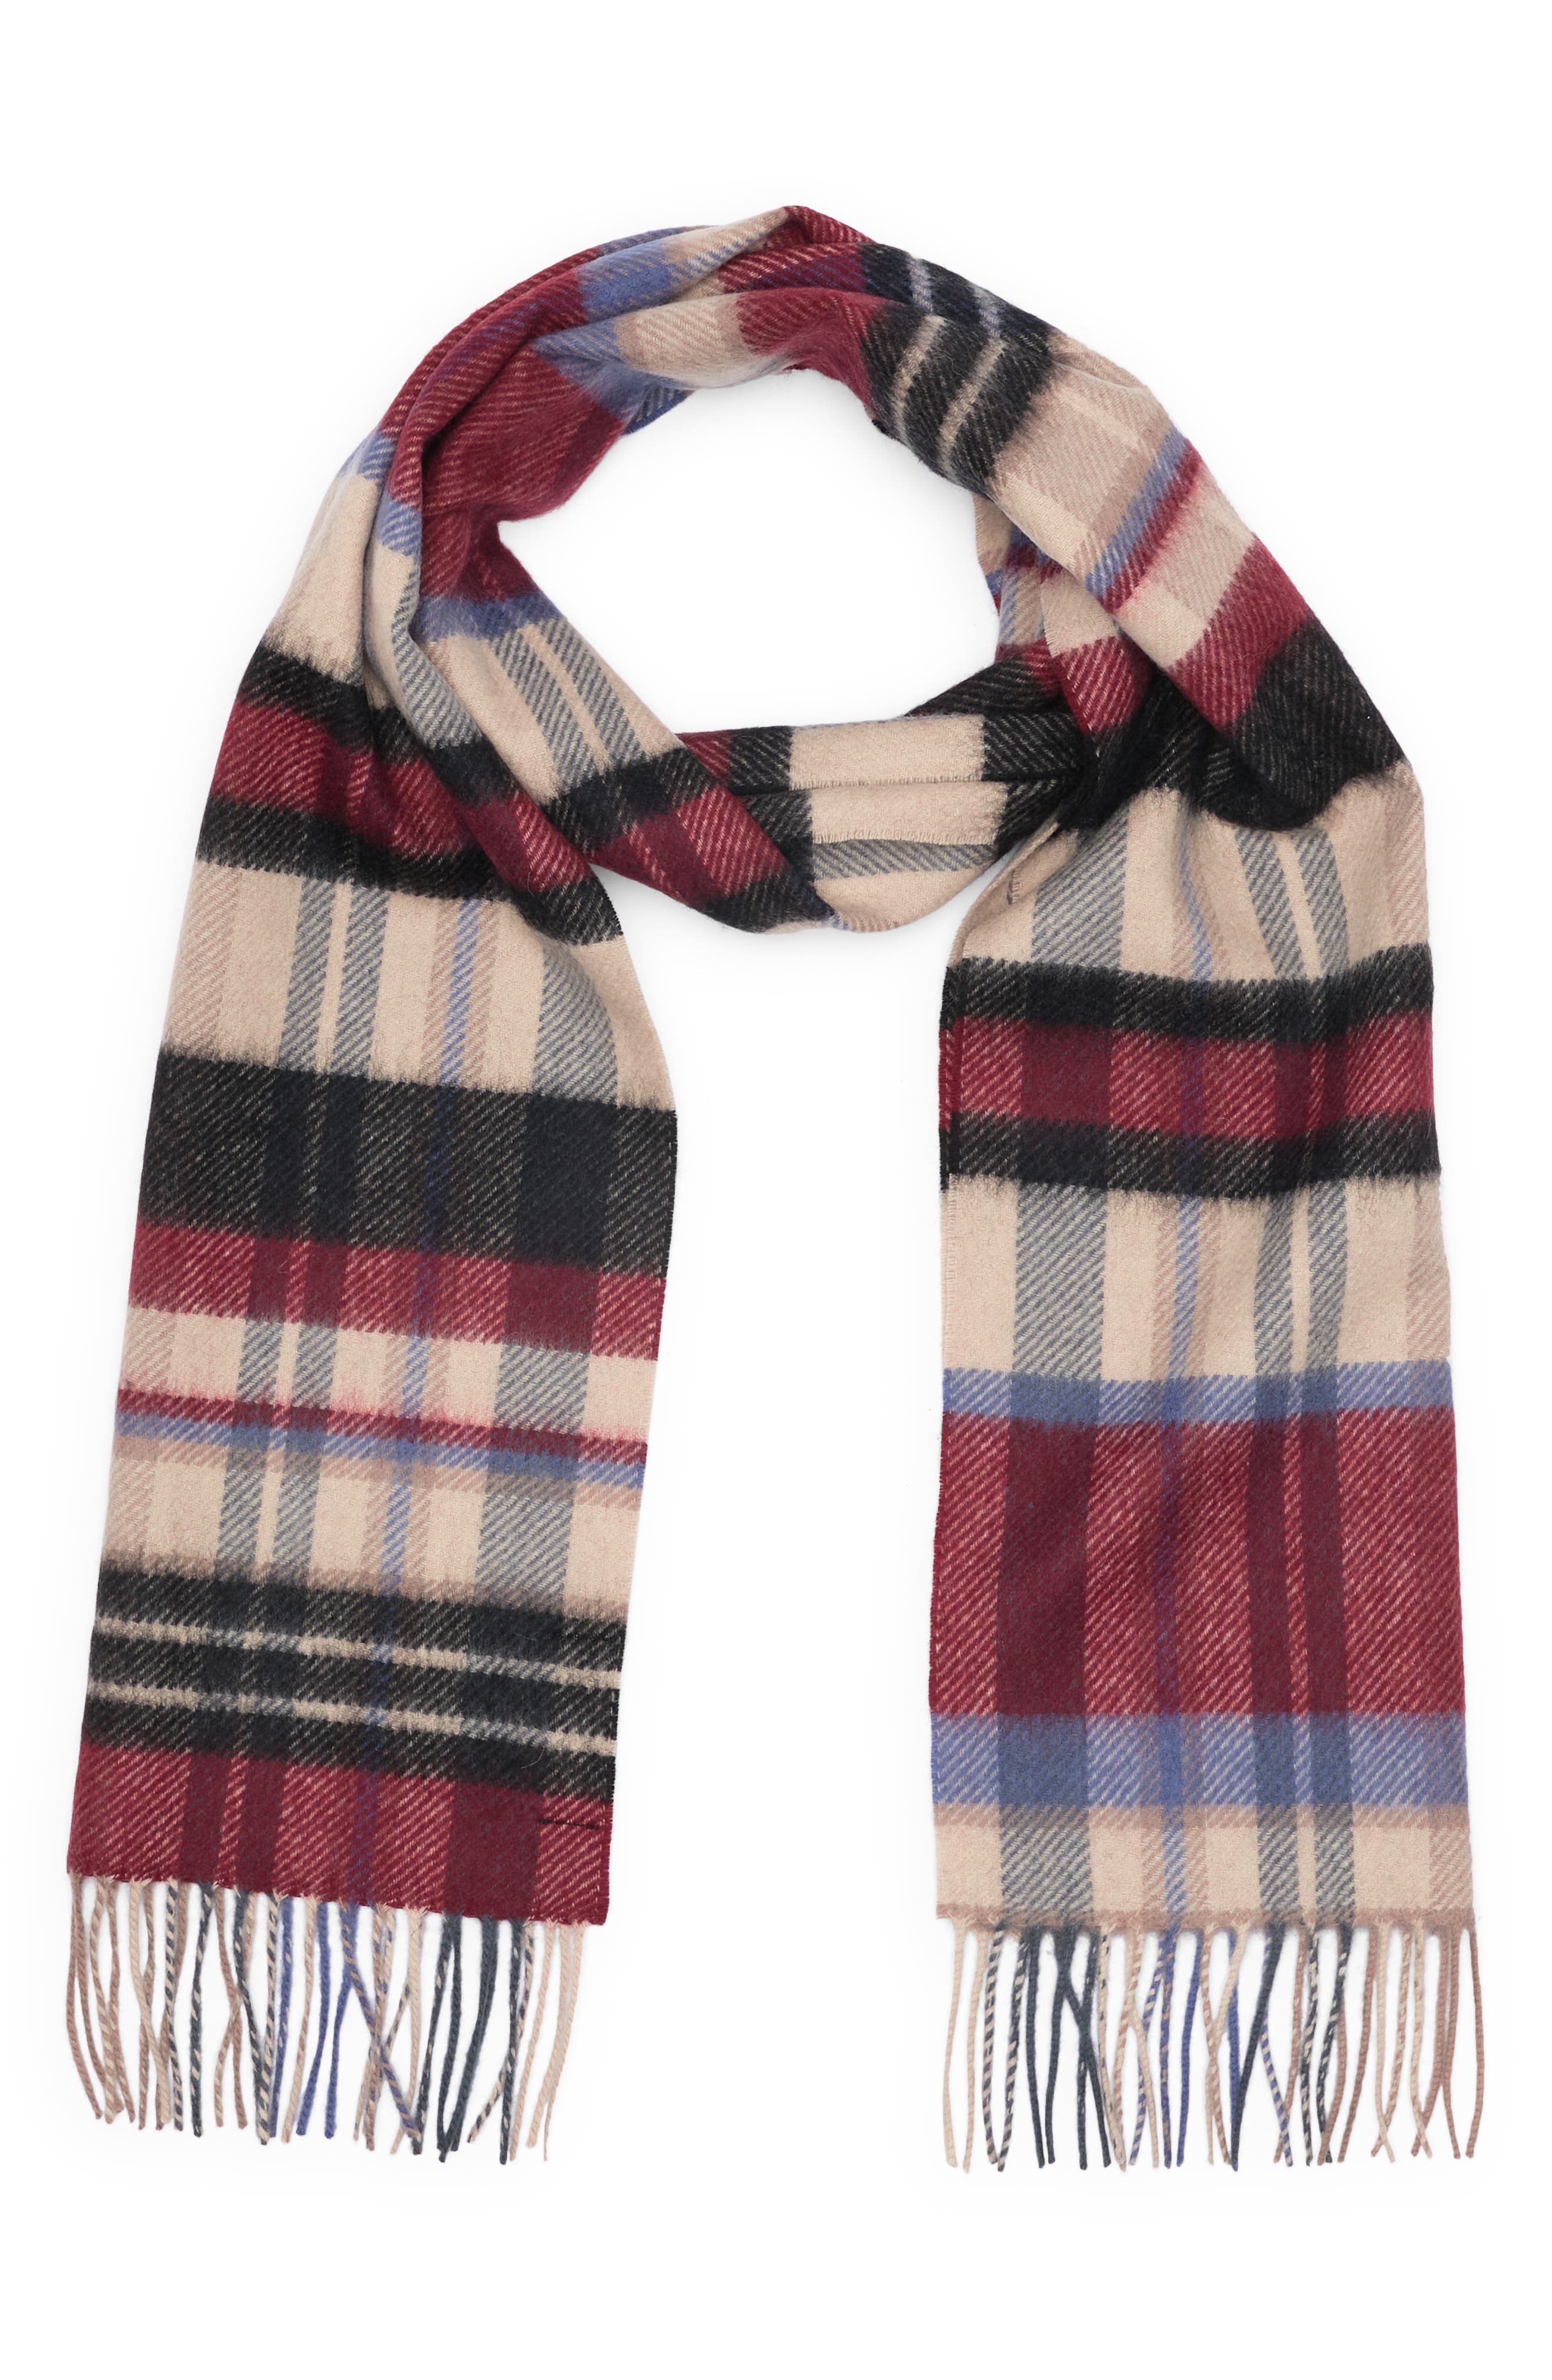 unisex long wide scarf Wool scarf yellow beige lightweight wool shawl oversized scarf sale gift idea alpaca mohair knitted scarf